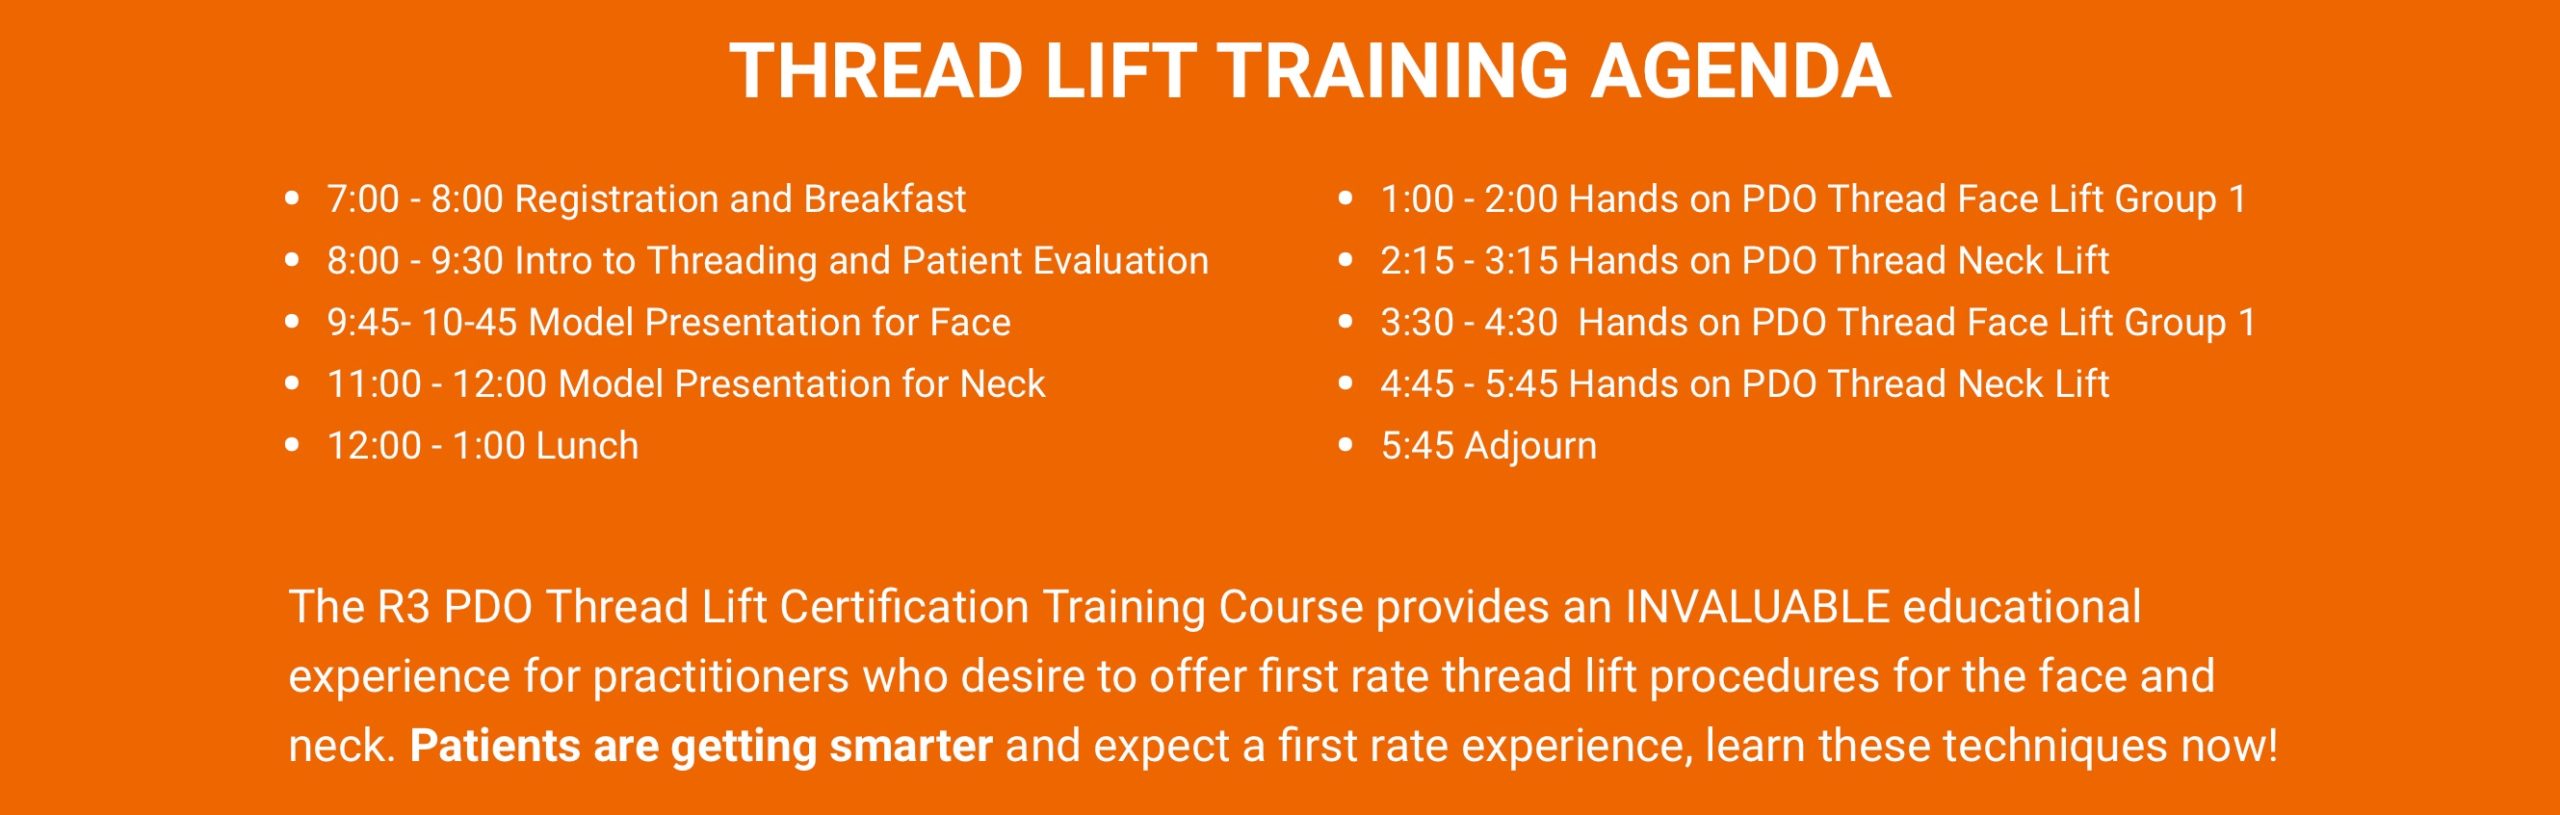 PDO thread lift training Agenda